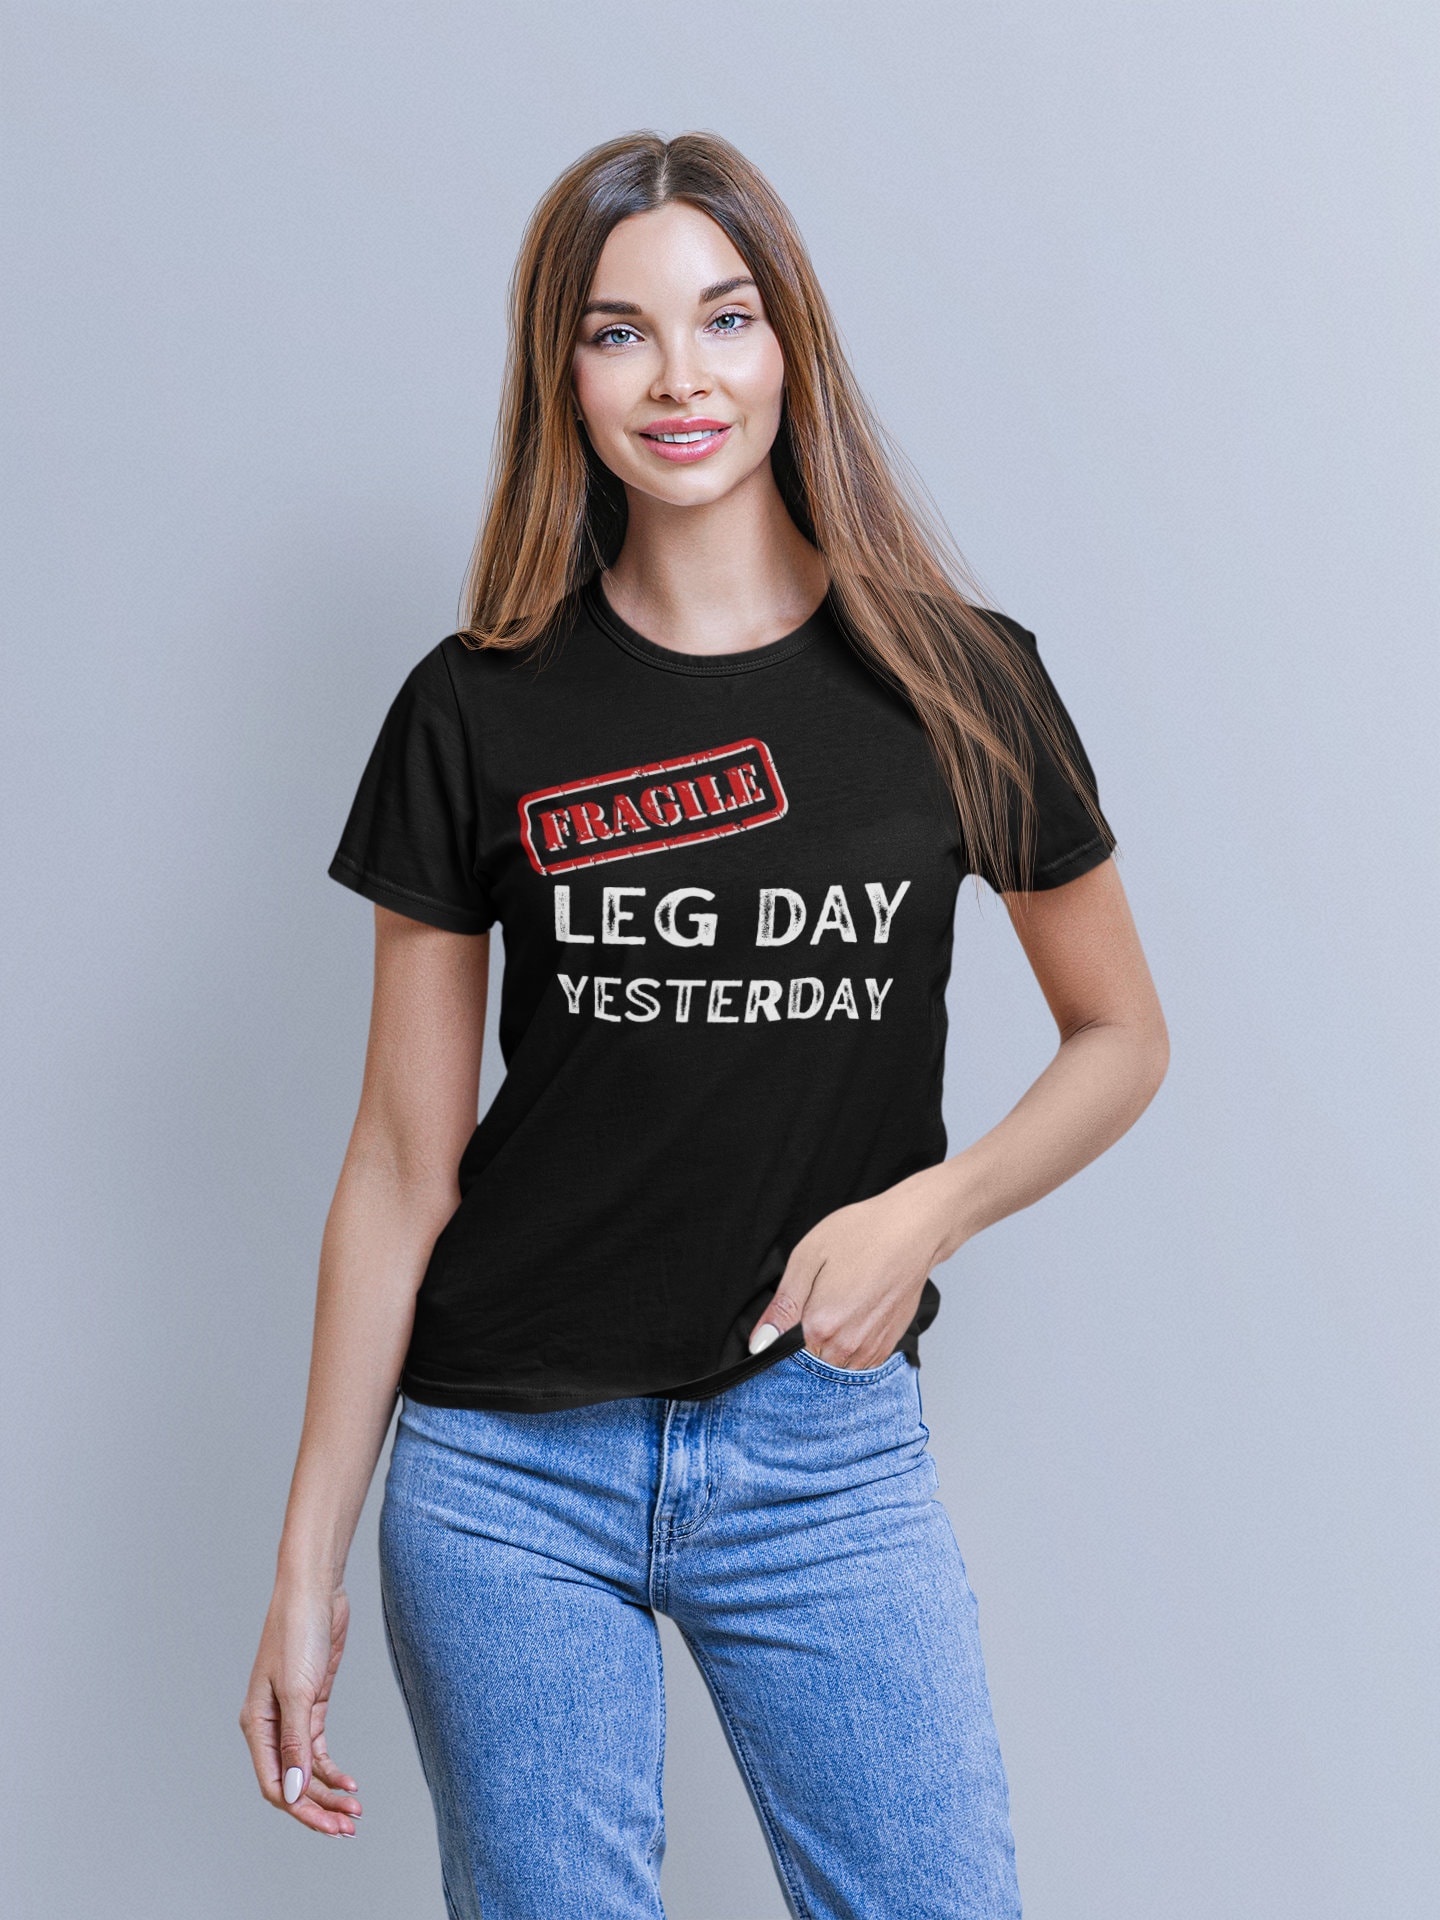 Fragile Leg Day Funny Crossfit Shirt Crossfit - Etsy